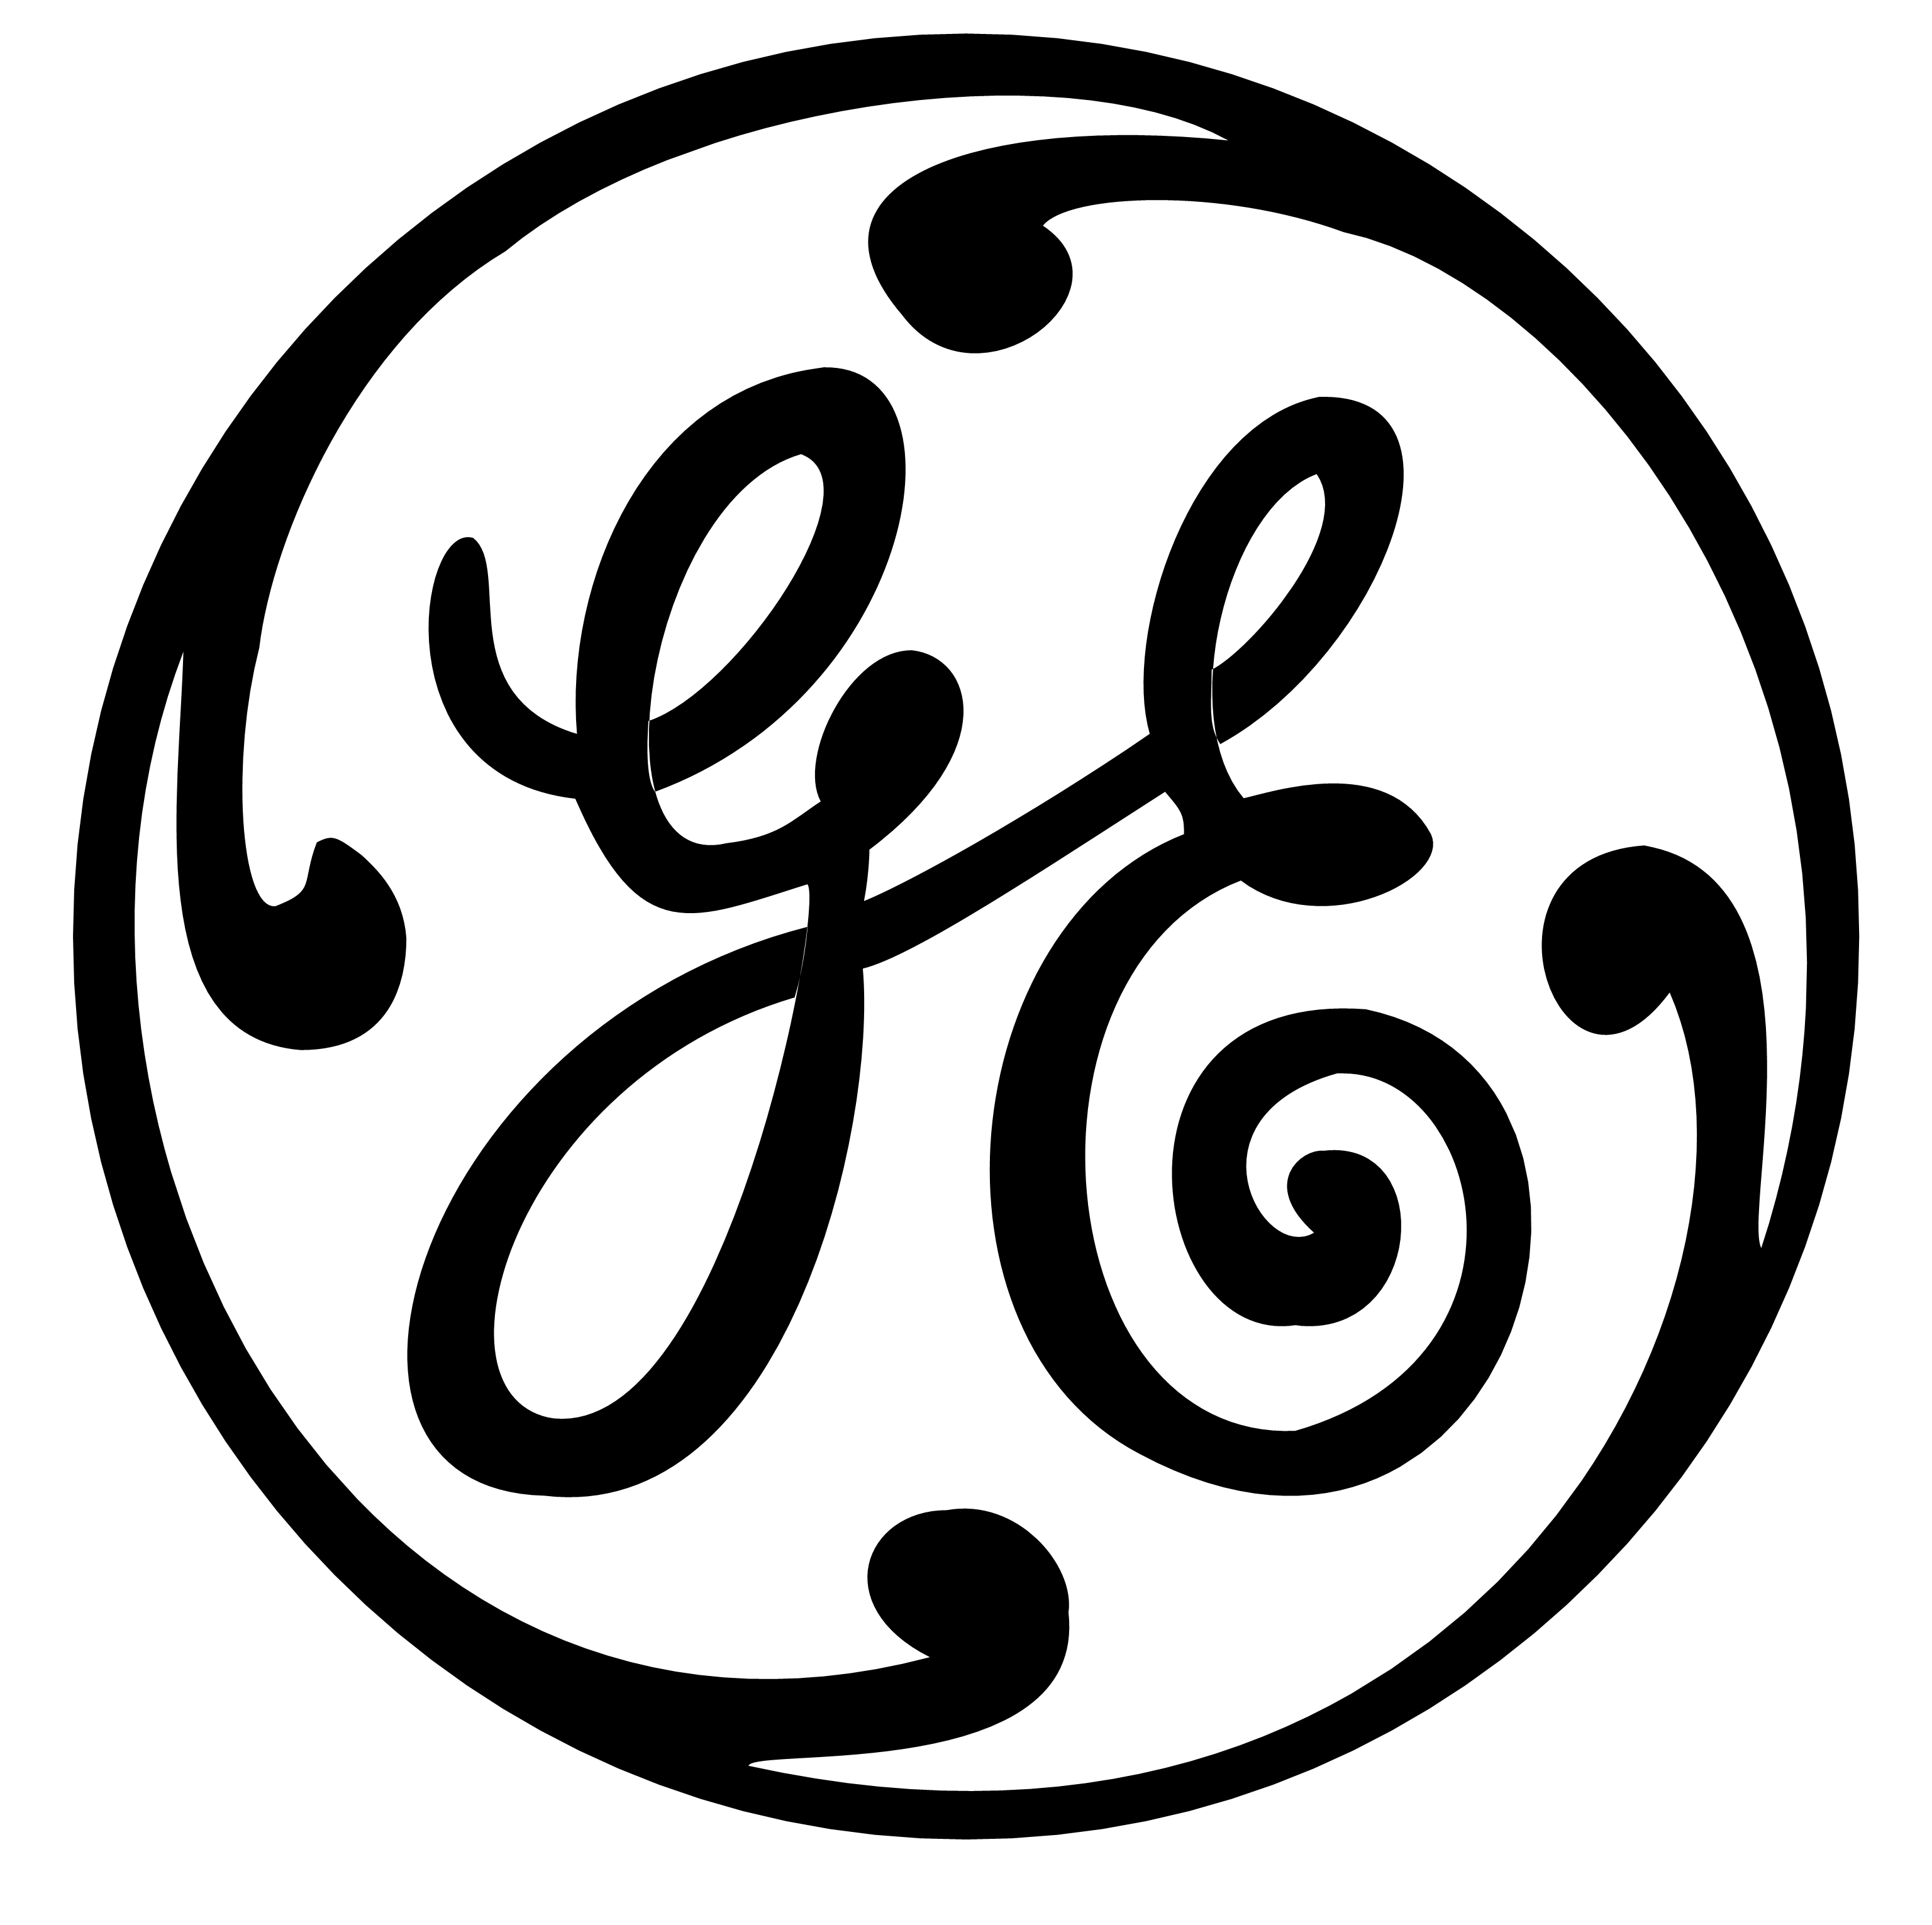 General Electric Logo - GE Evolución by Paola Castano on Prezi